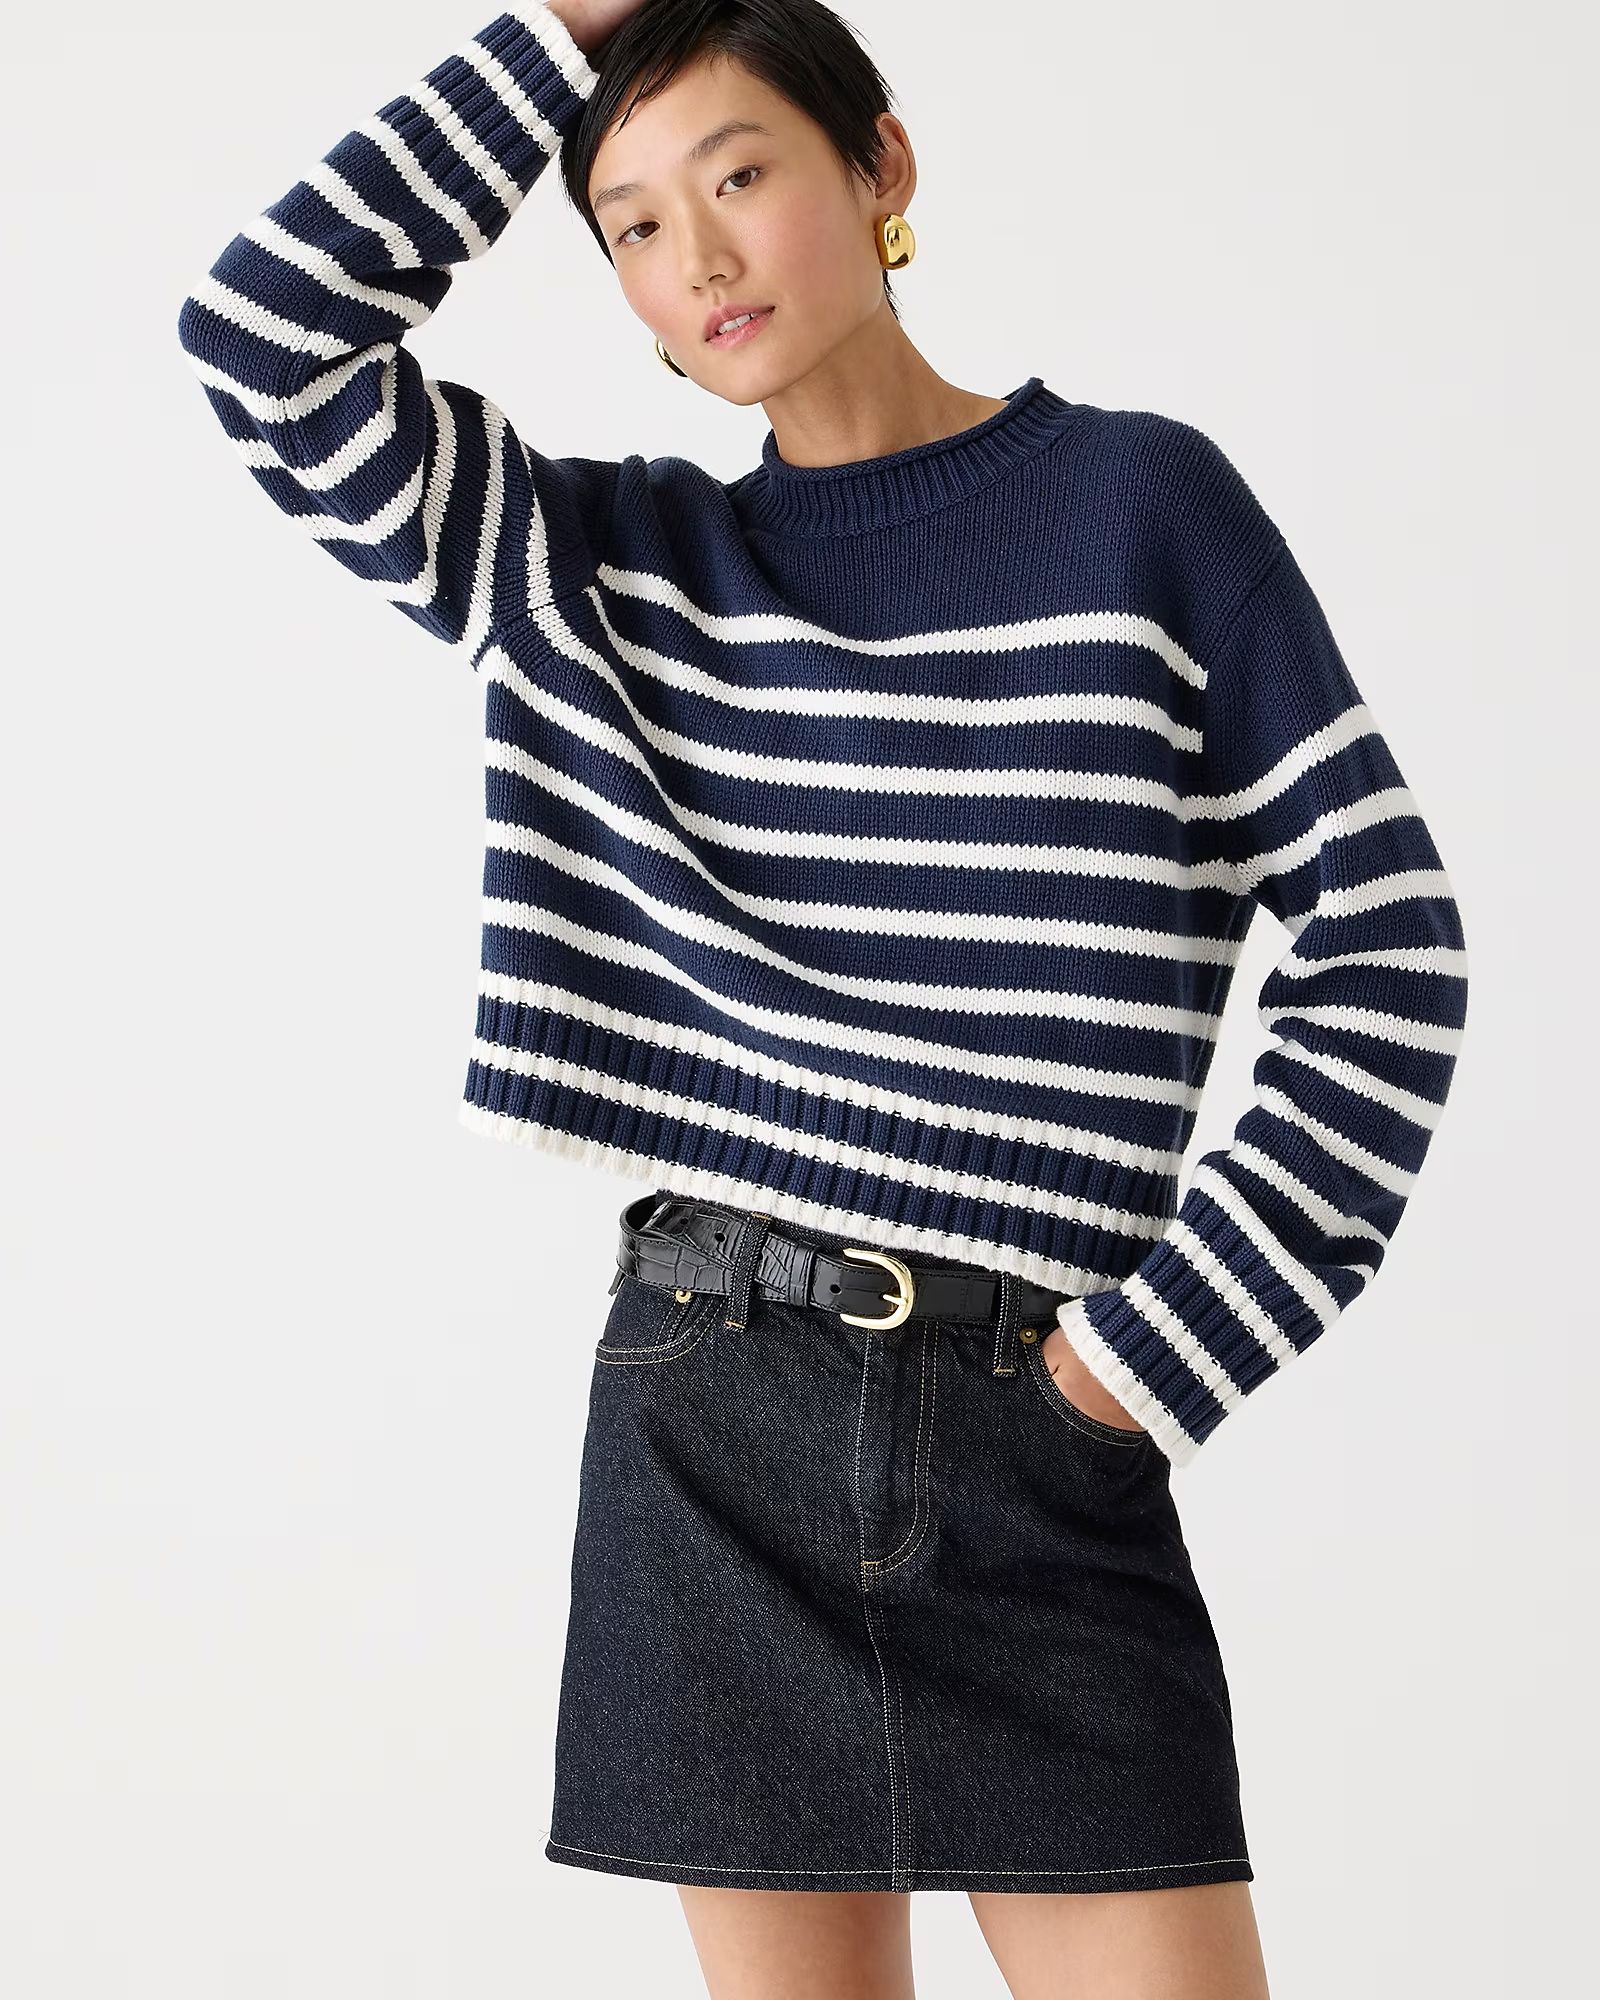 Rollneck™ sweater in stripe | J.Crew US